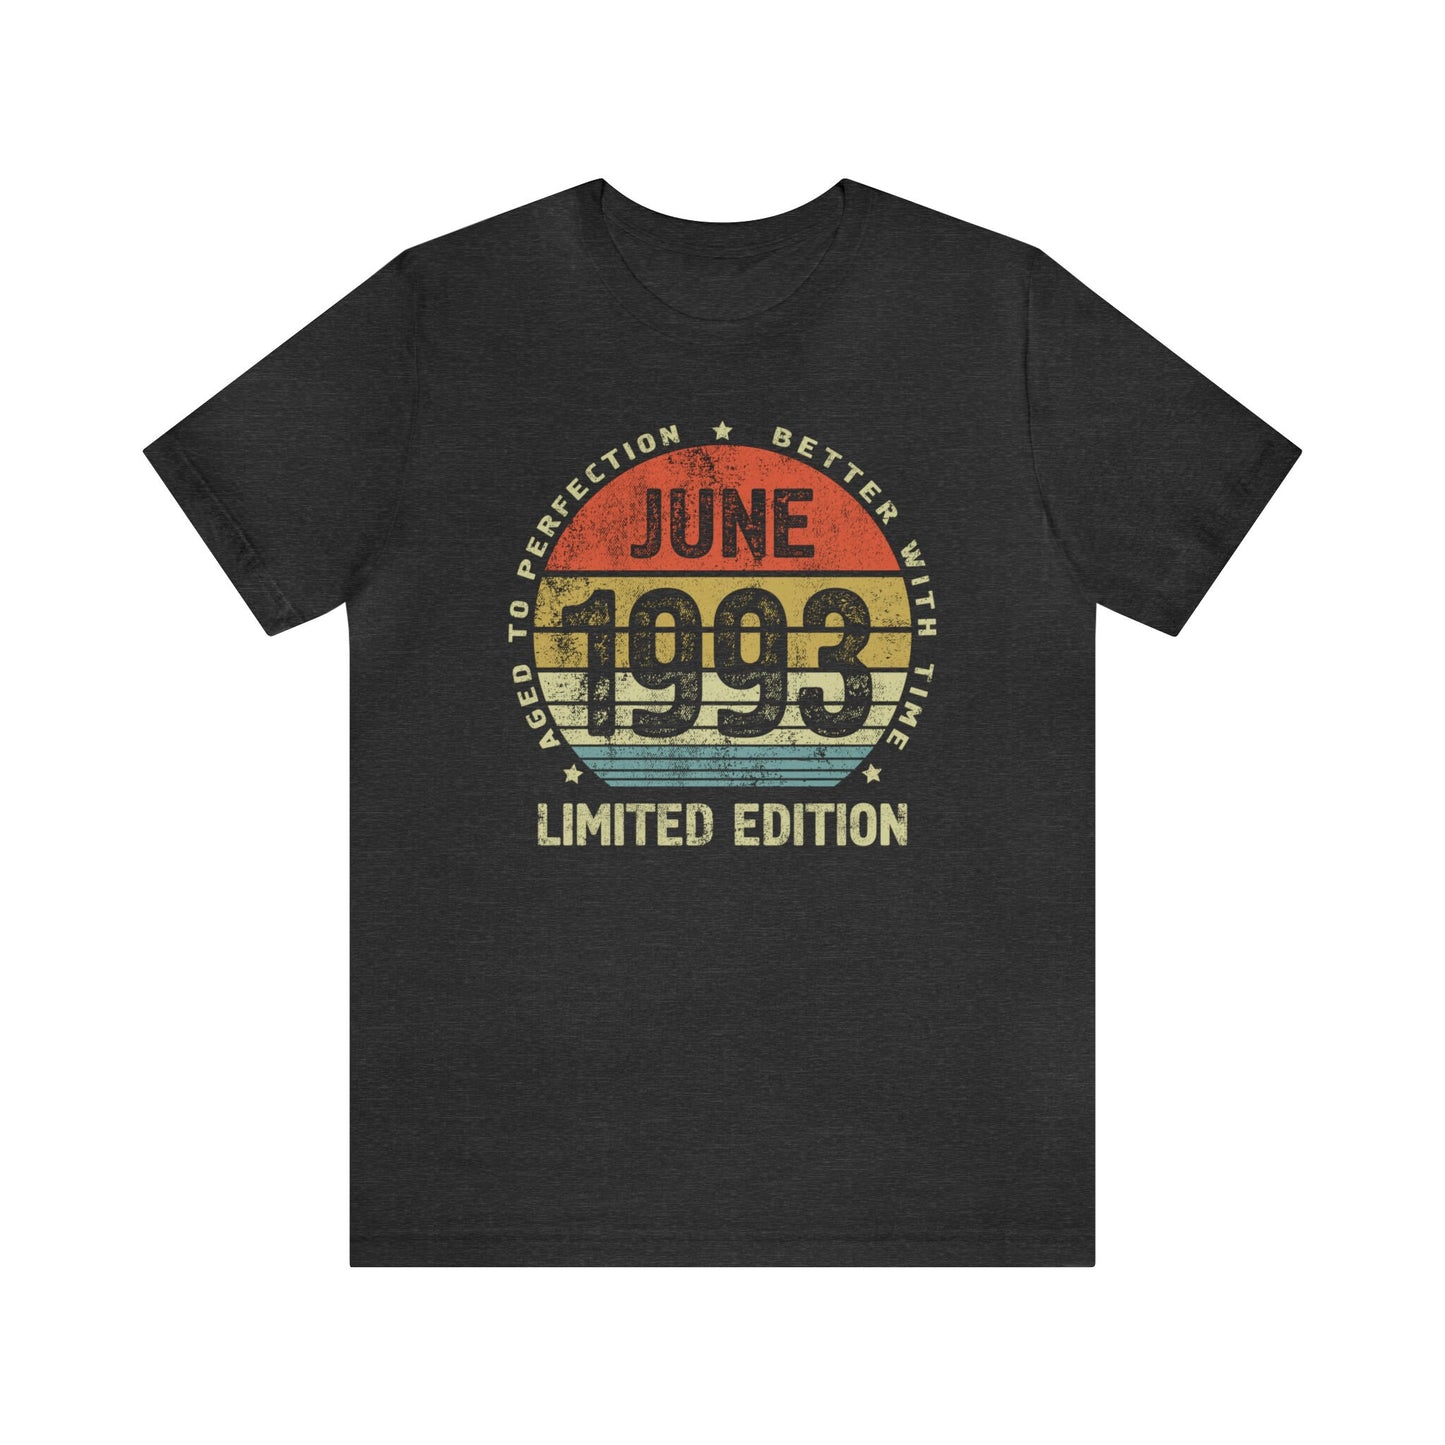 June 1993 birthday gift t-shirt for women or men,  birthday shirt for sister or brother